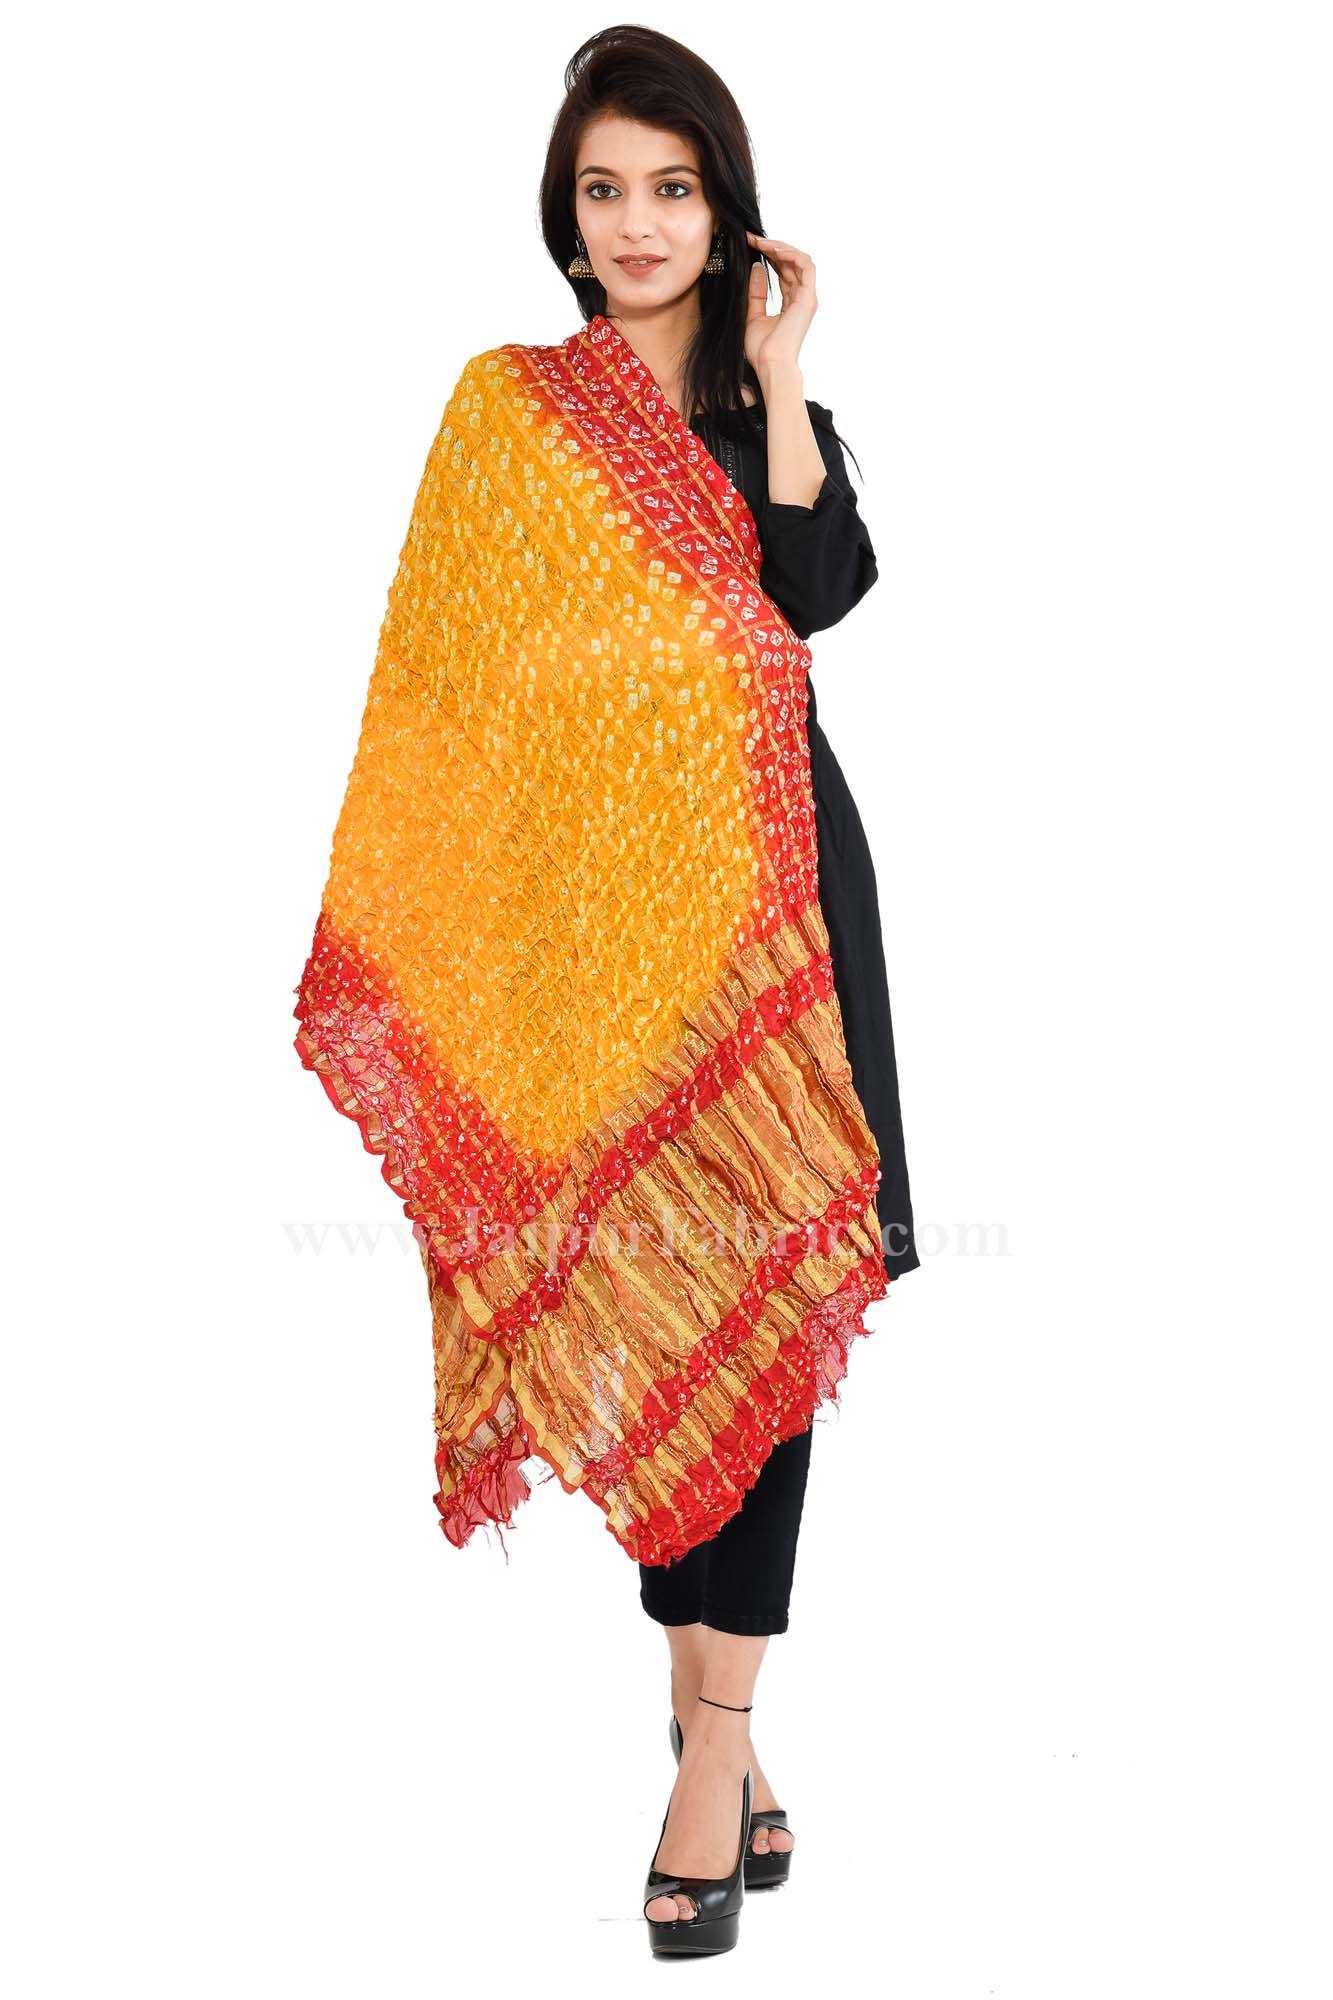 Gharchola Art Silk MultiColored Jaipuri Rajasthani Bandhni Bandhej Multi-Colored Heavy Dupatta Chunni